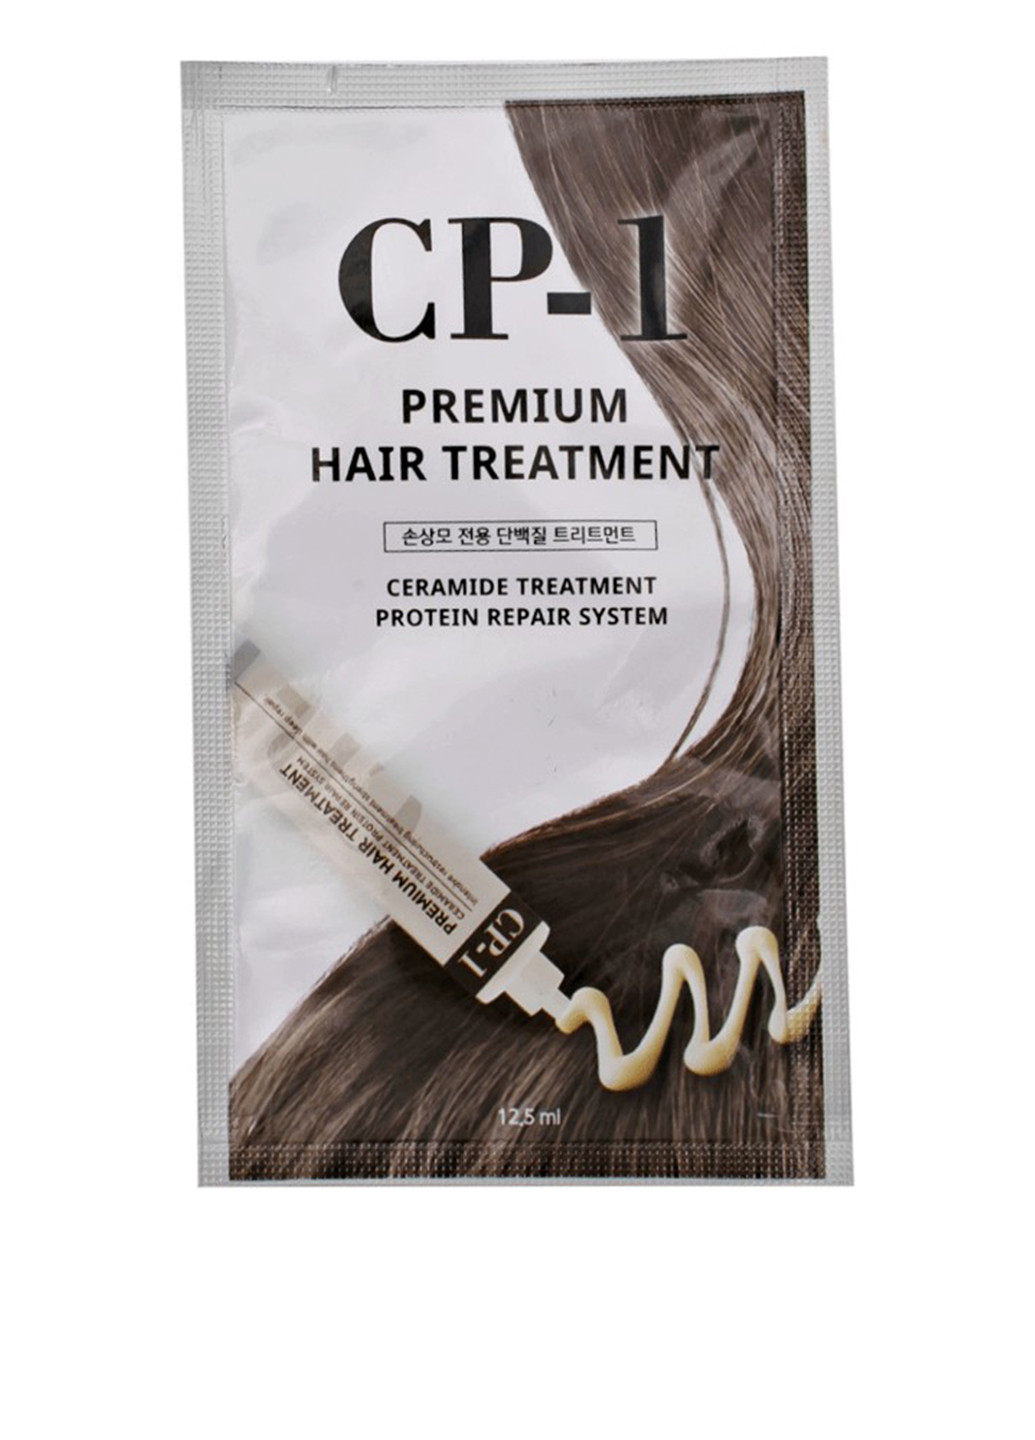 Протеиновая маска для волос Premium Hair Treatment, 12,5 мл CP-1 (184326095)